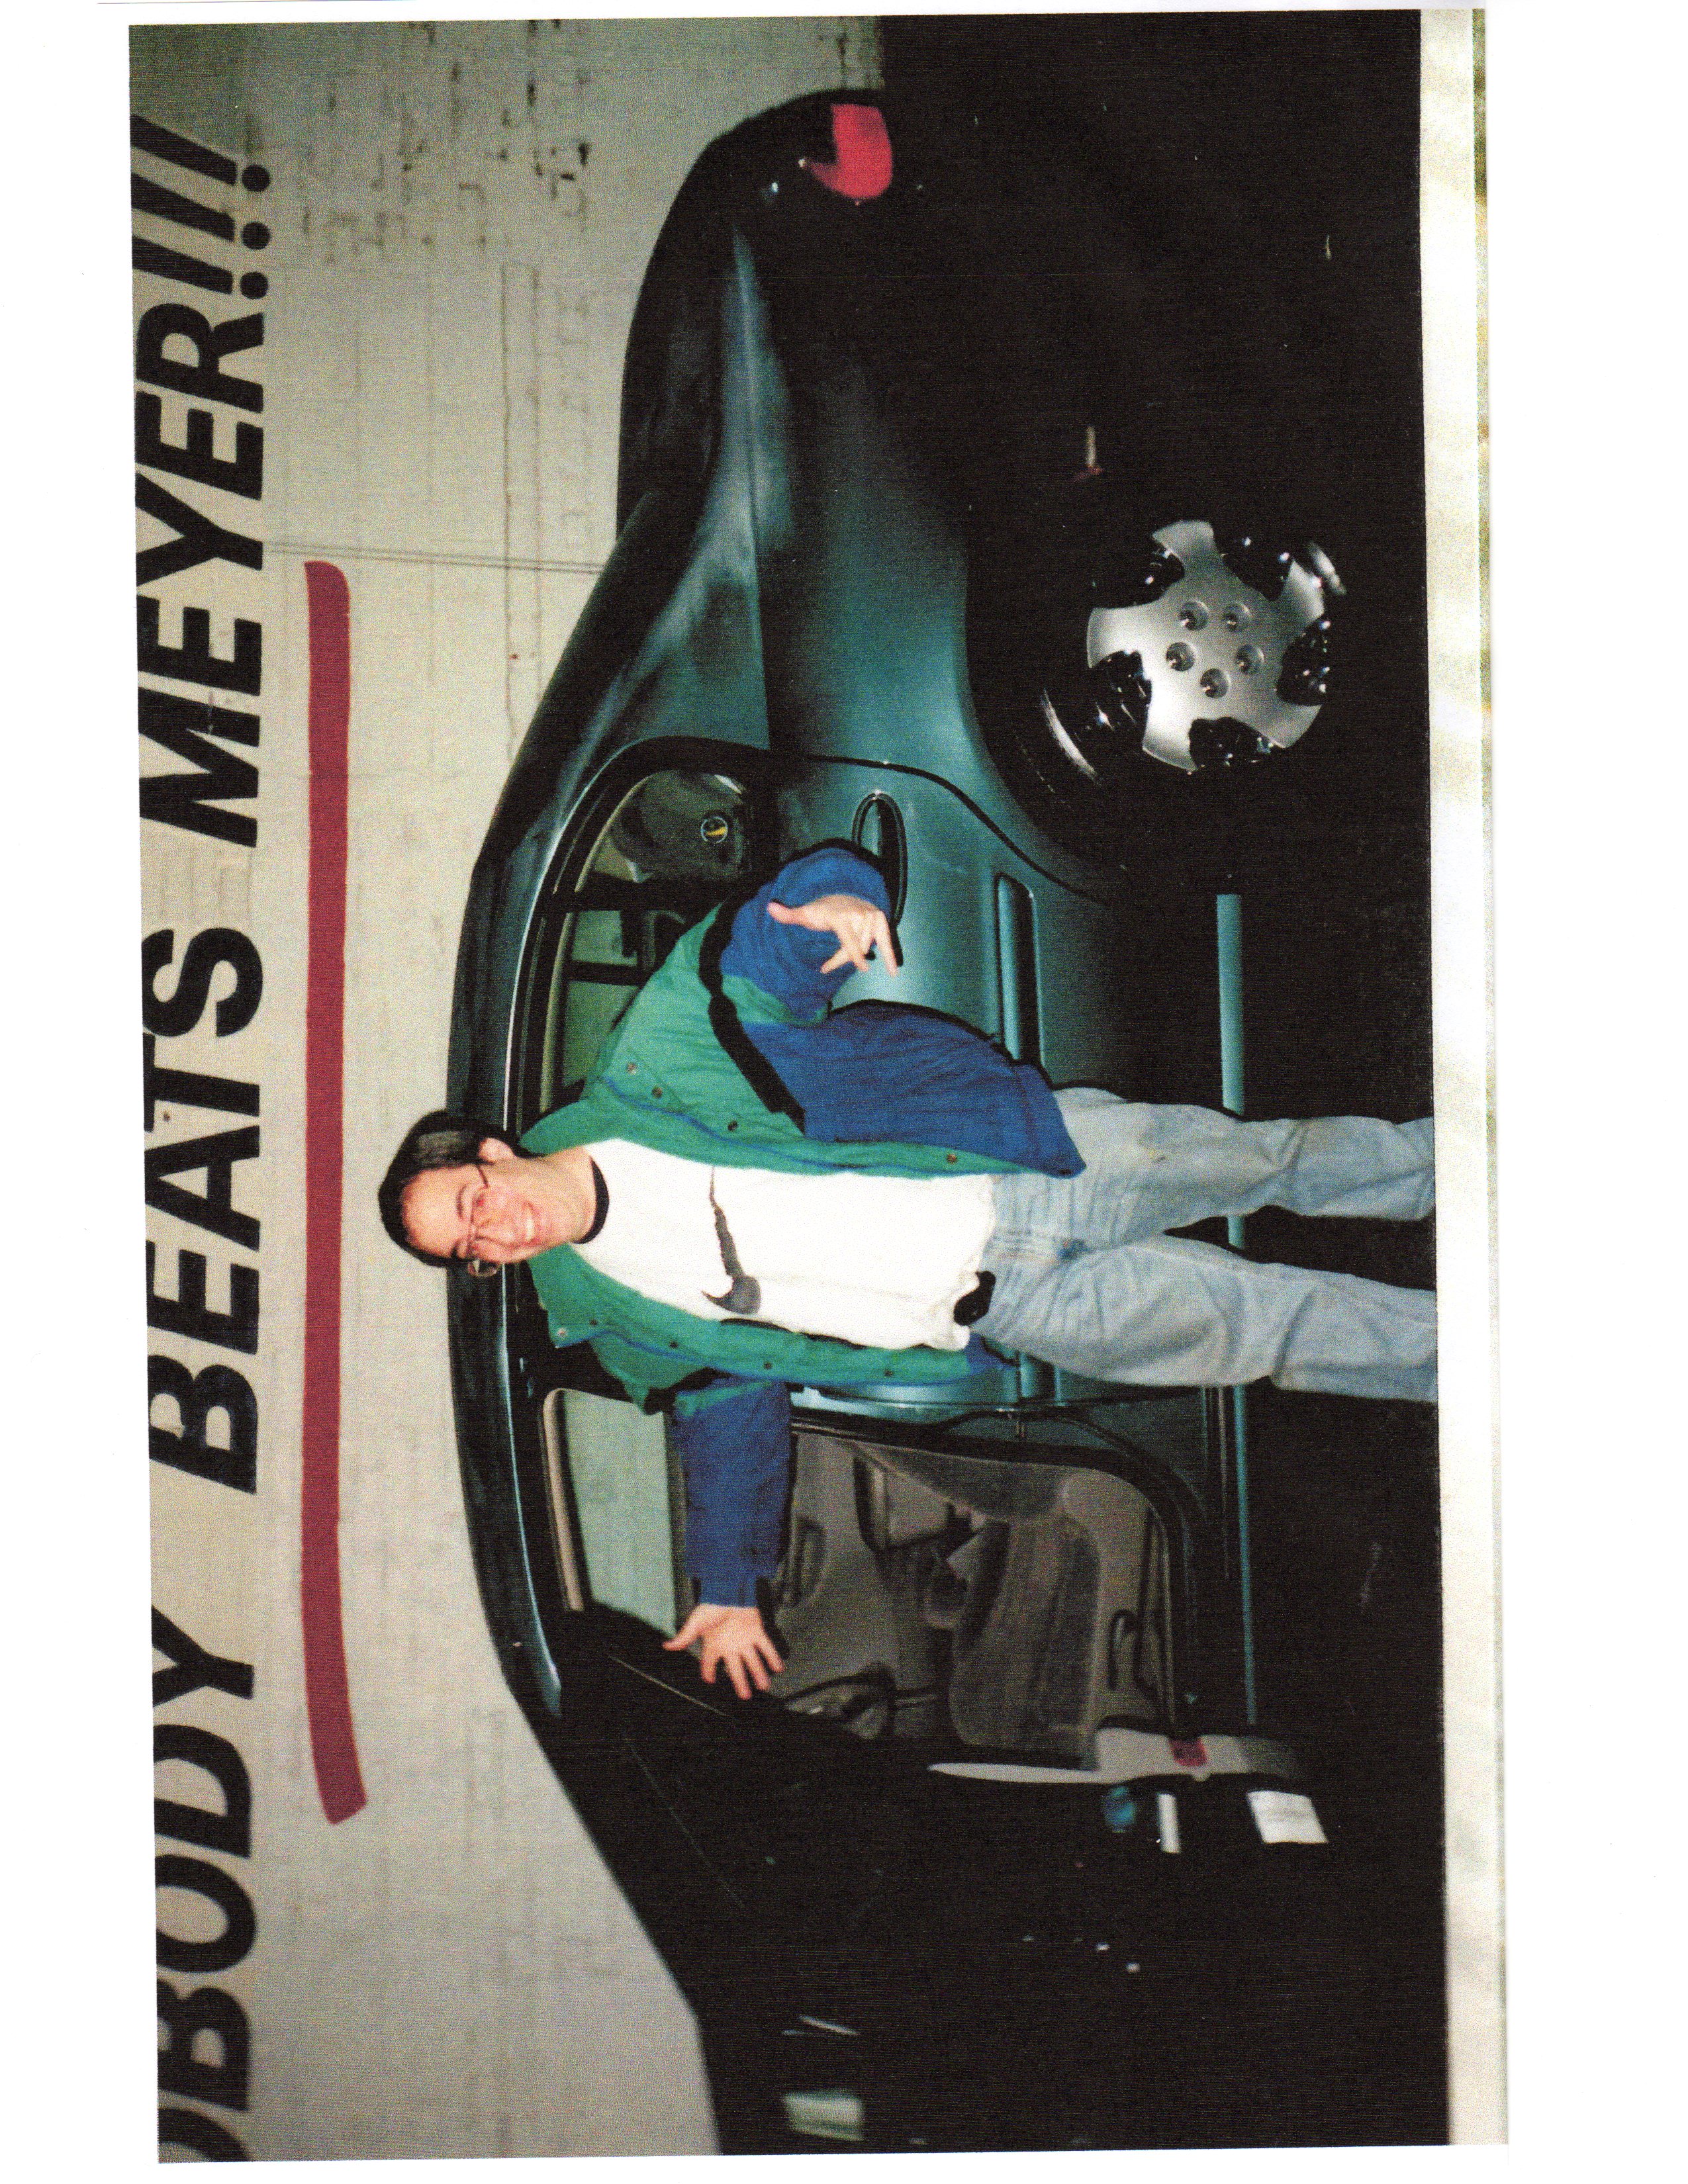 Jeff Eigen on a print shoot for Meyer Chevrolet.